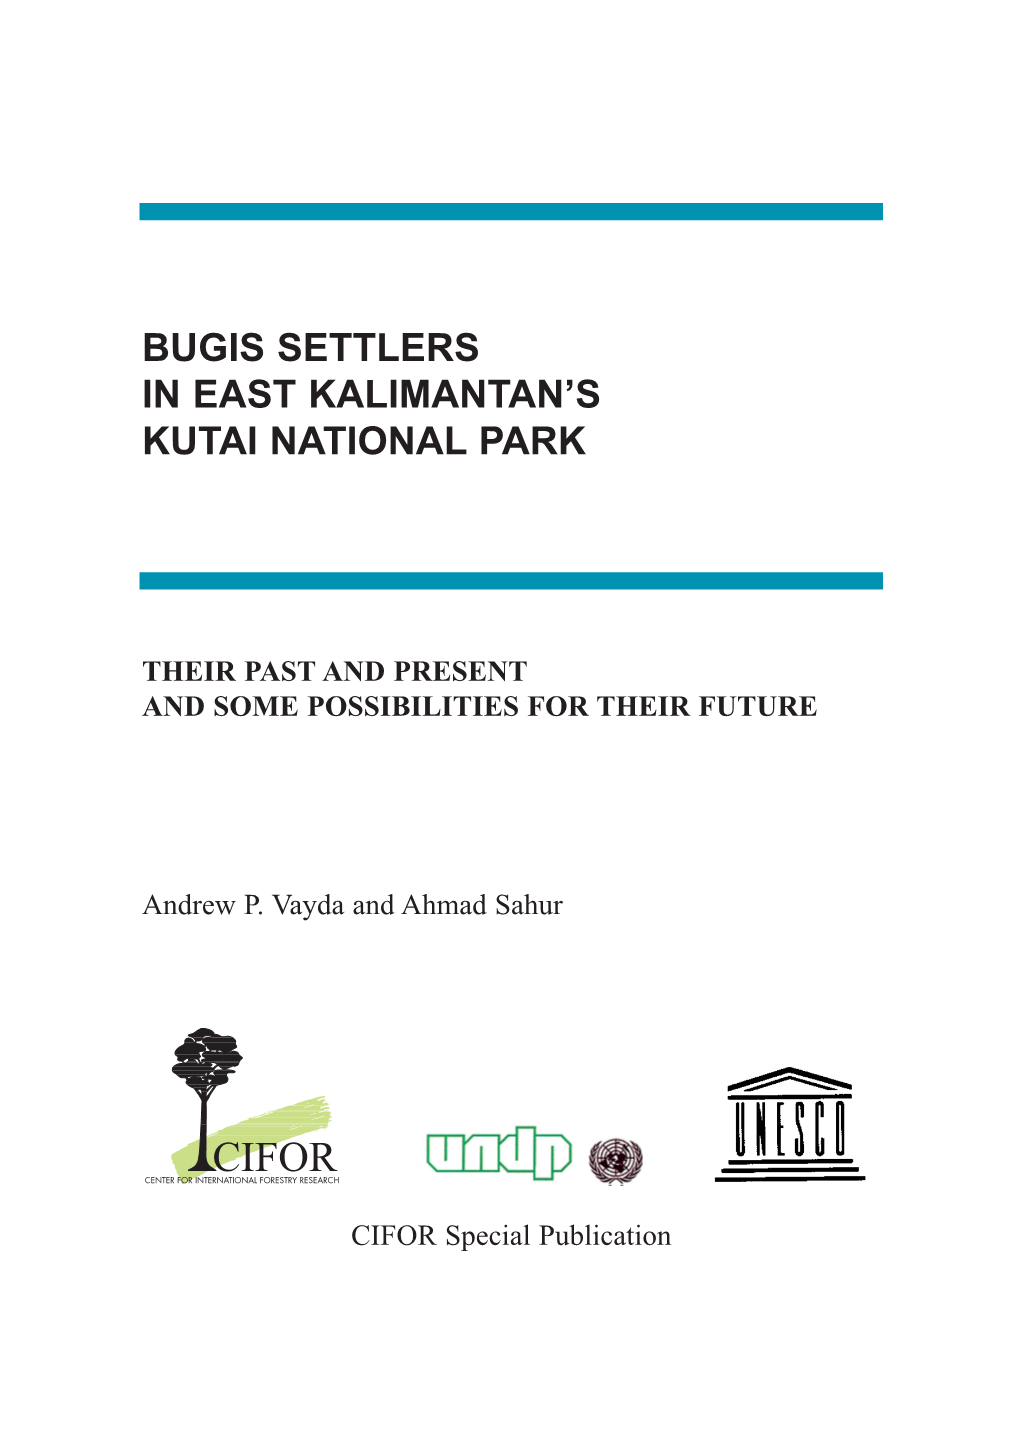 Bugis Settlers in East Kalimantan's Kutai National Park